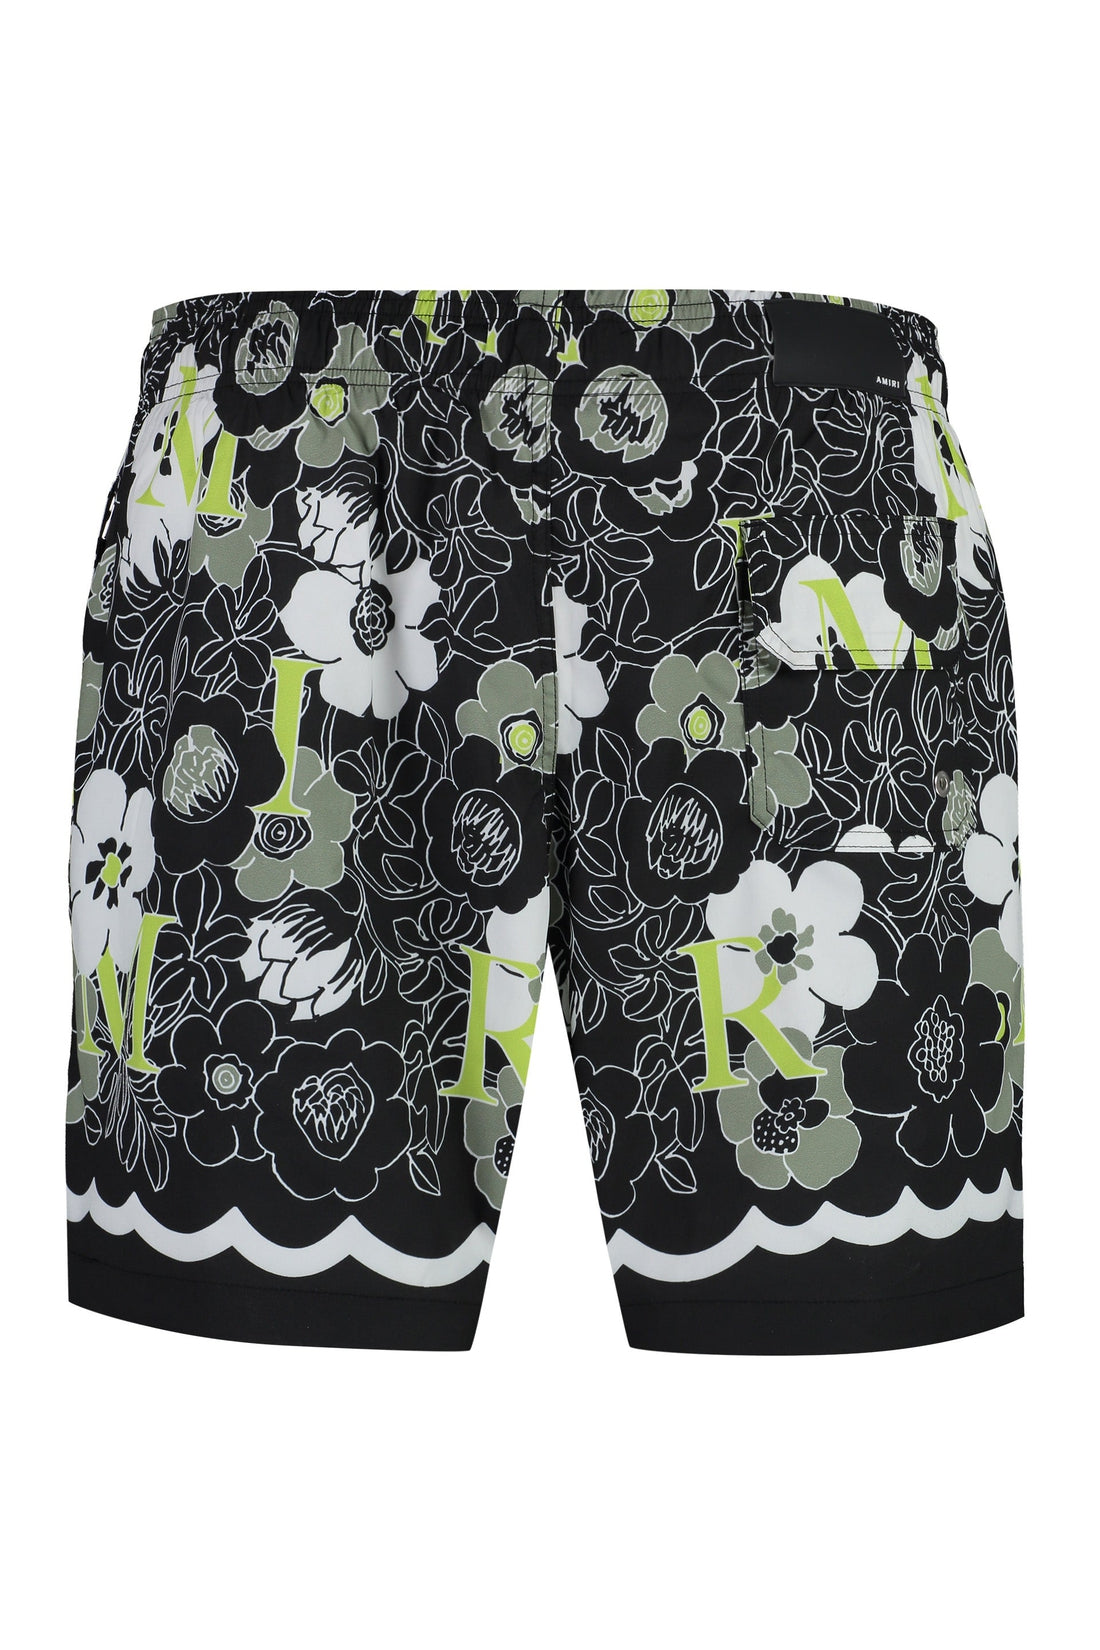 AMIRI-OUTLET-SALE-Printed swim shorts-ARCHIVIST